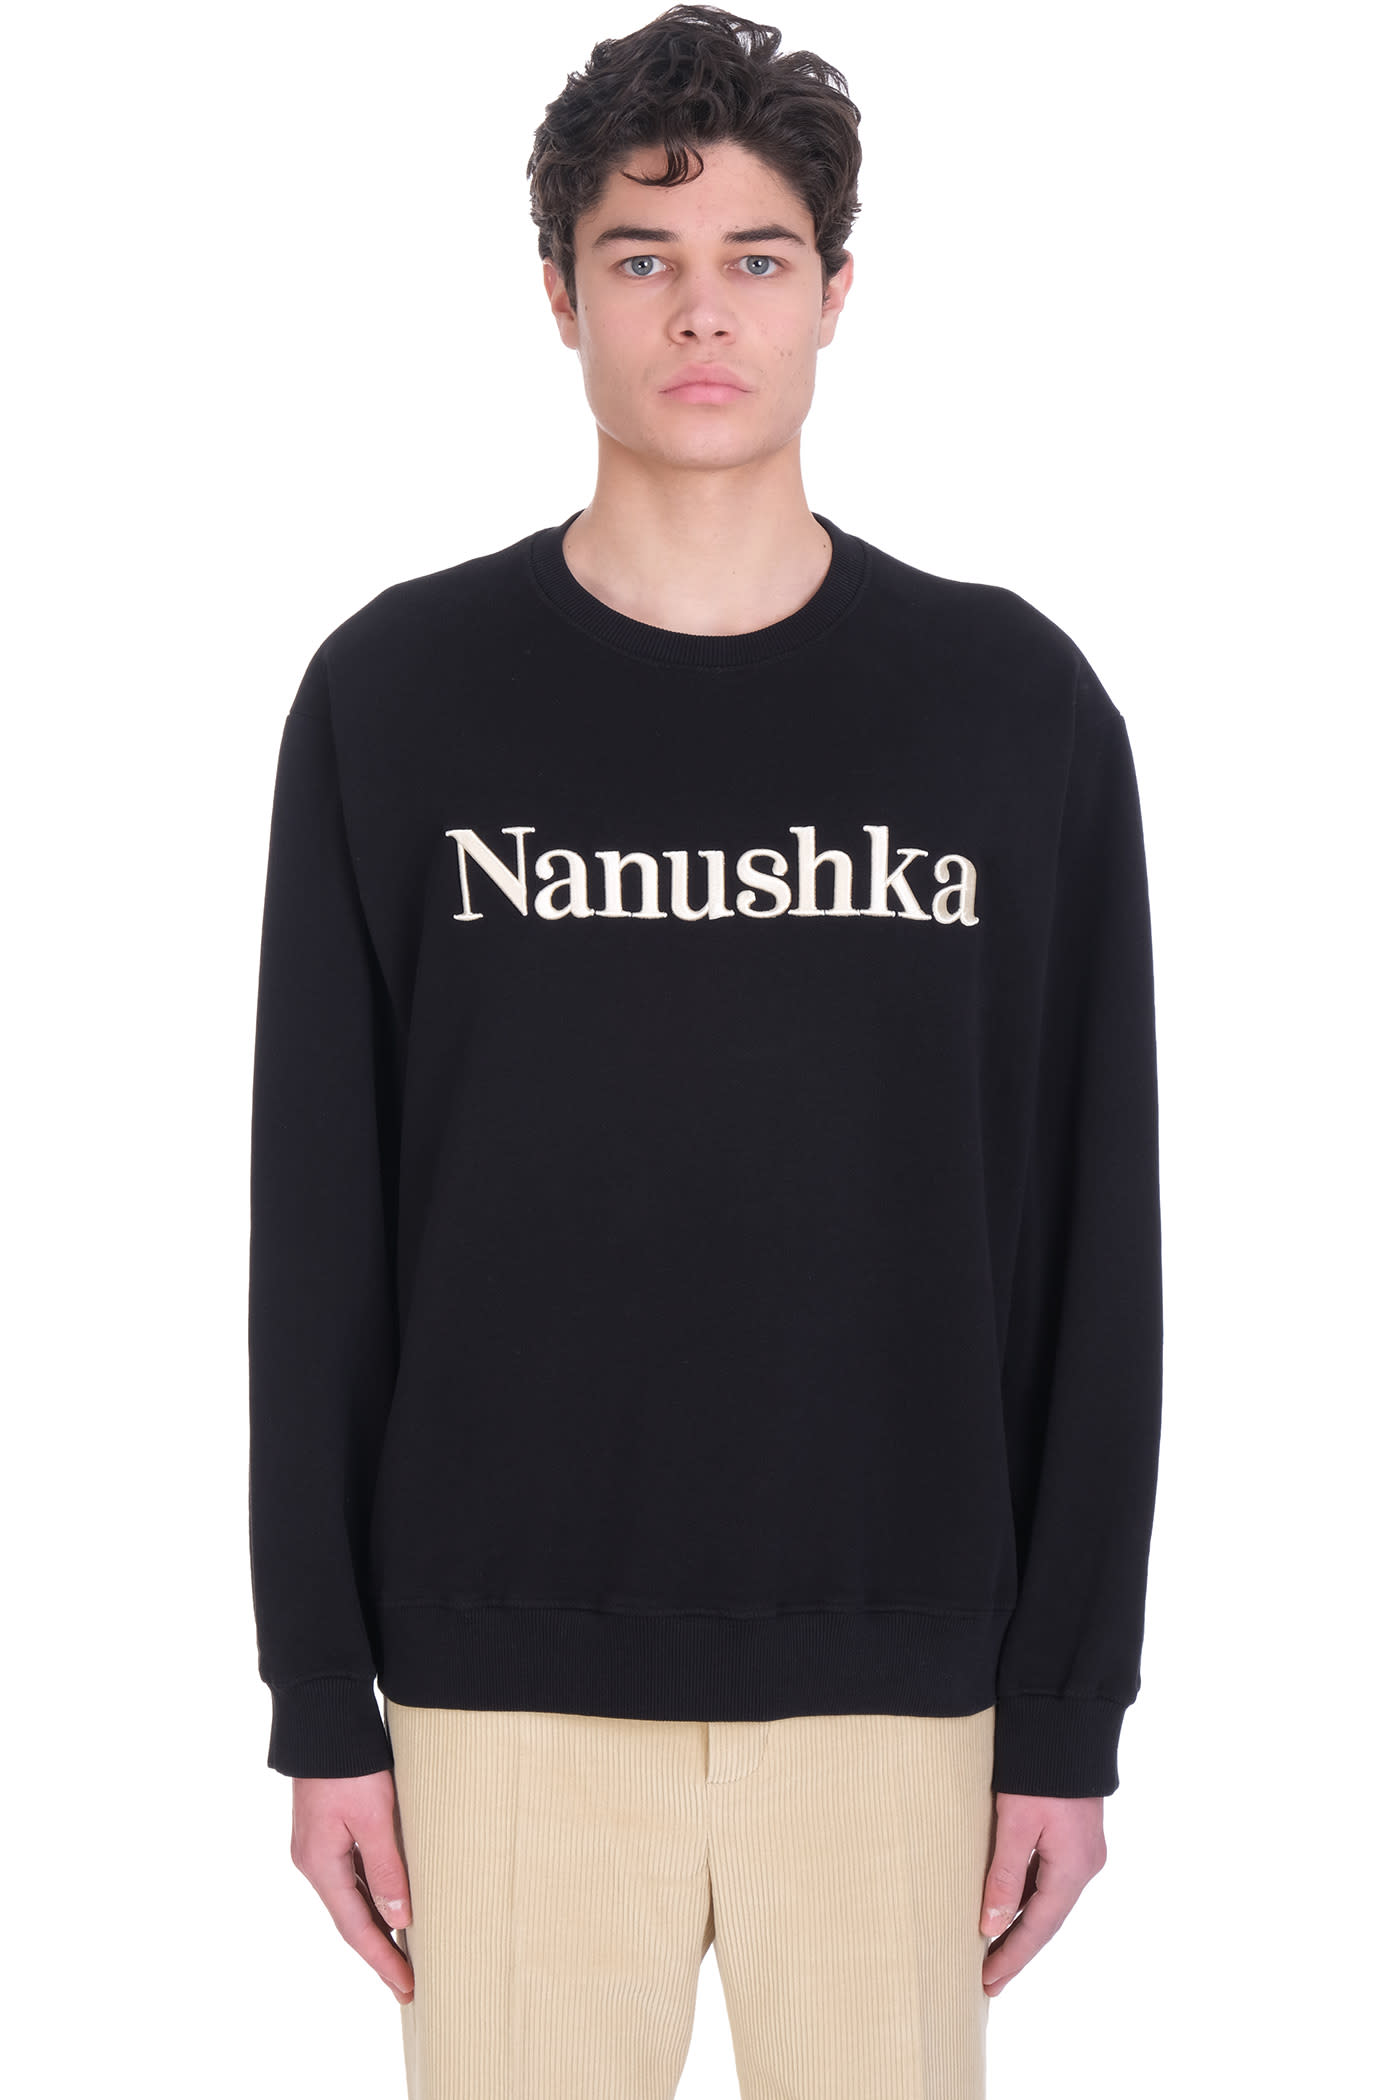 Nanushka Remy Sweatshirt In Black Cotton